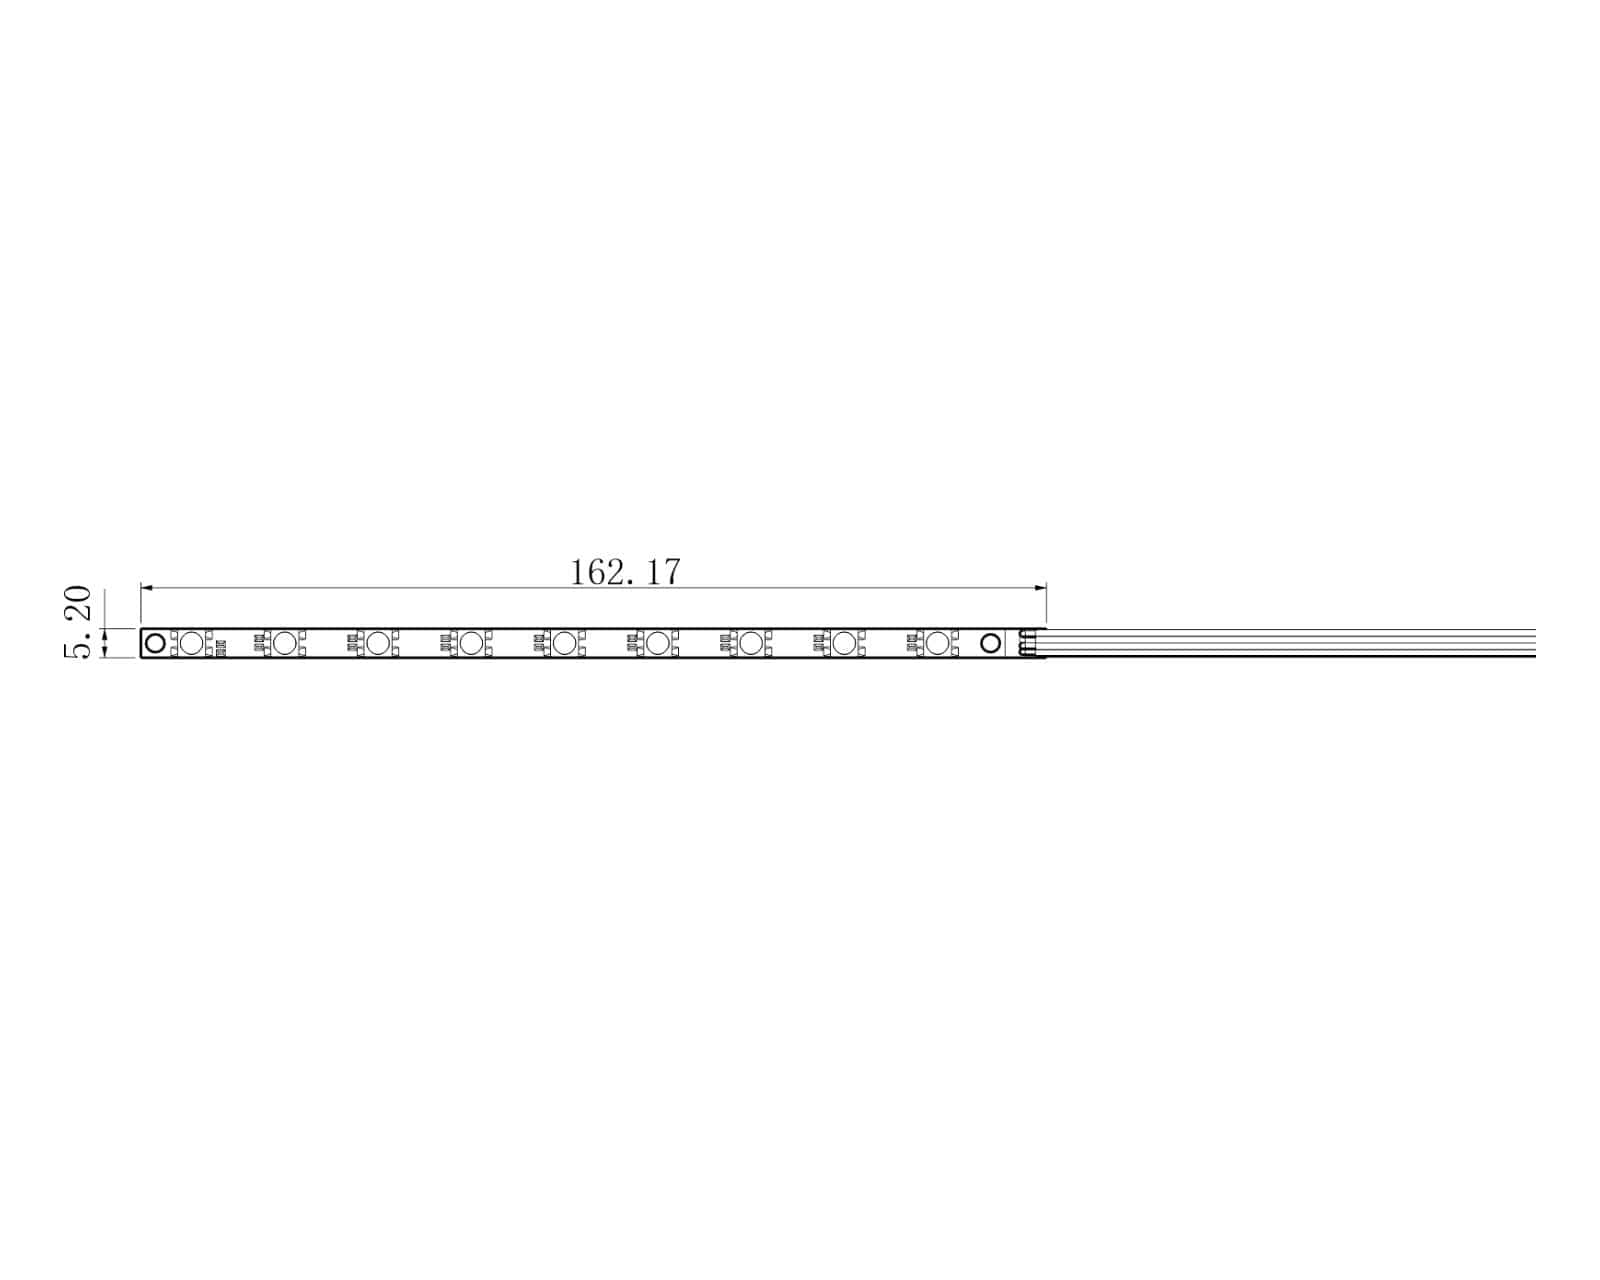 Bykski 12v Water Block RGB LED Strip Light Version 2 - 100mm (B-VCLT-1 –  PrimoChill - KEEPING IT COOL